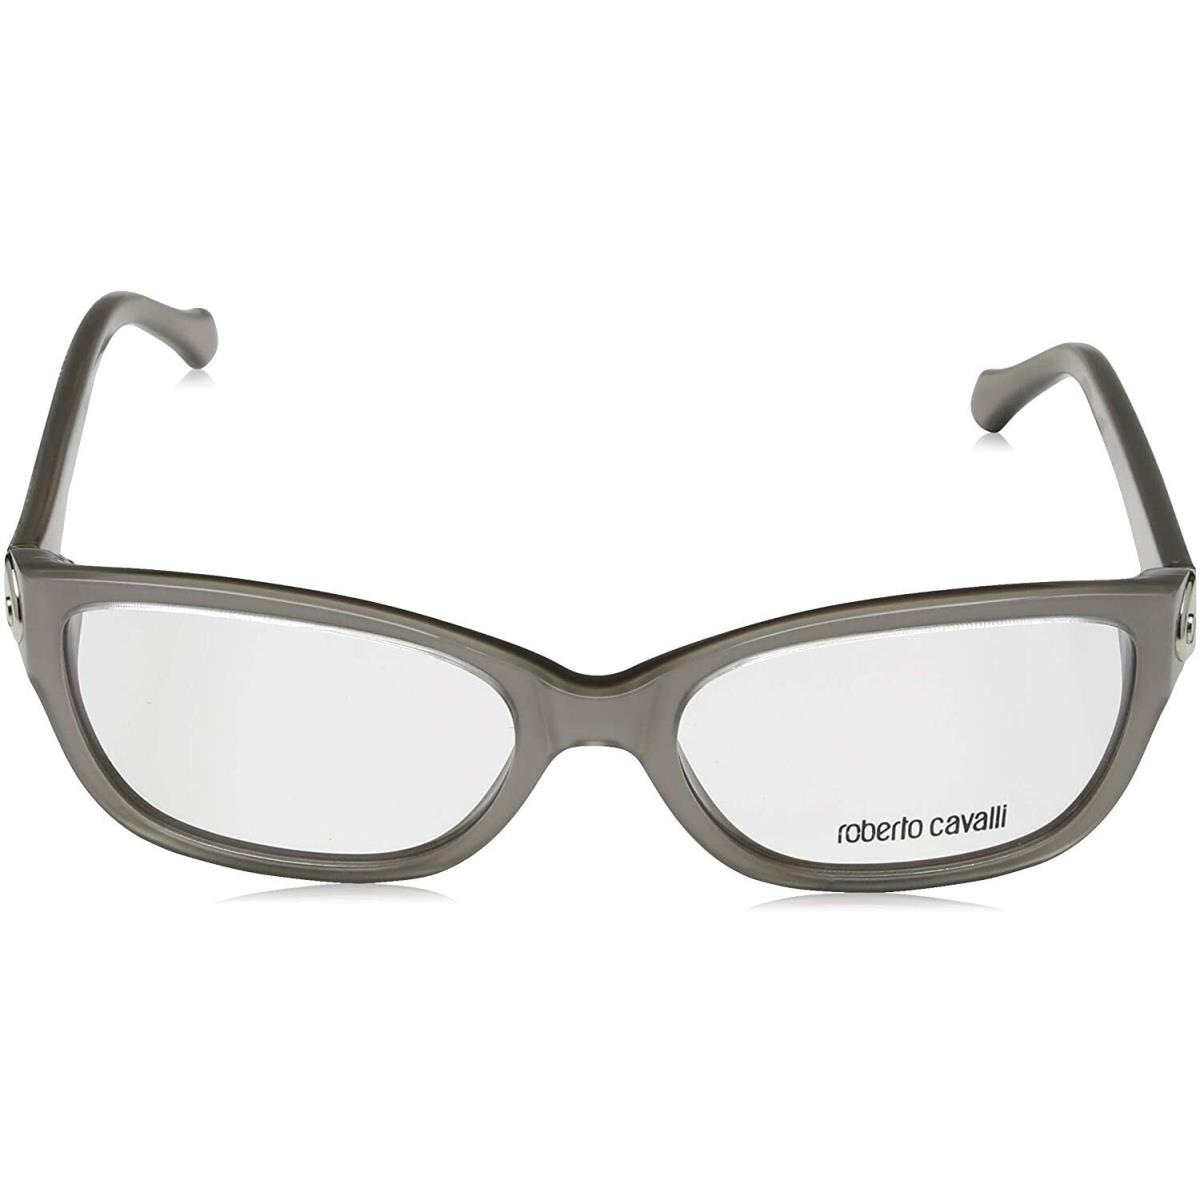 Roberto Cavalli RC770 Grande Soeur Grey Pearl 057 Eyeglasses Frame 53-17-135 770